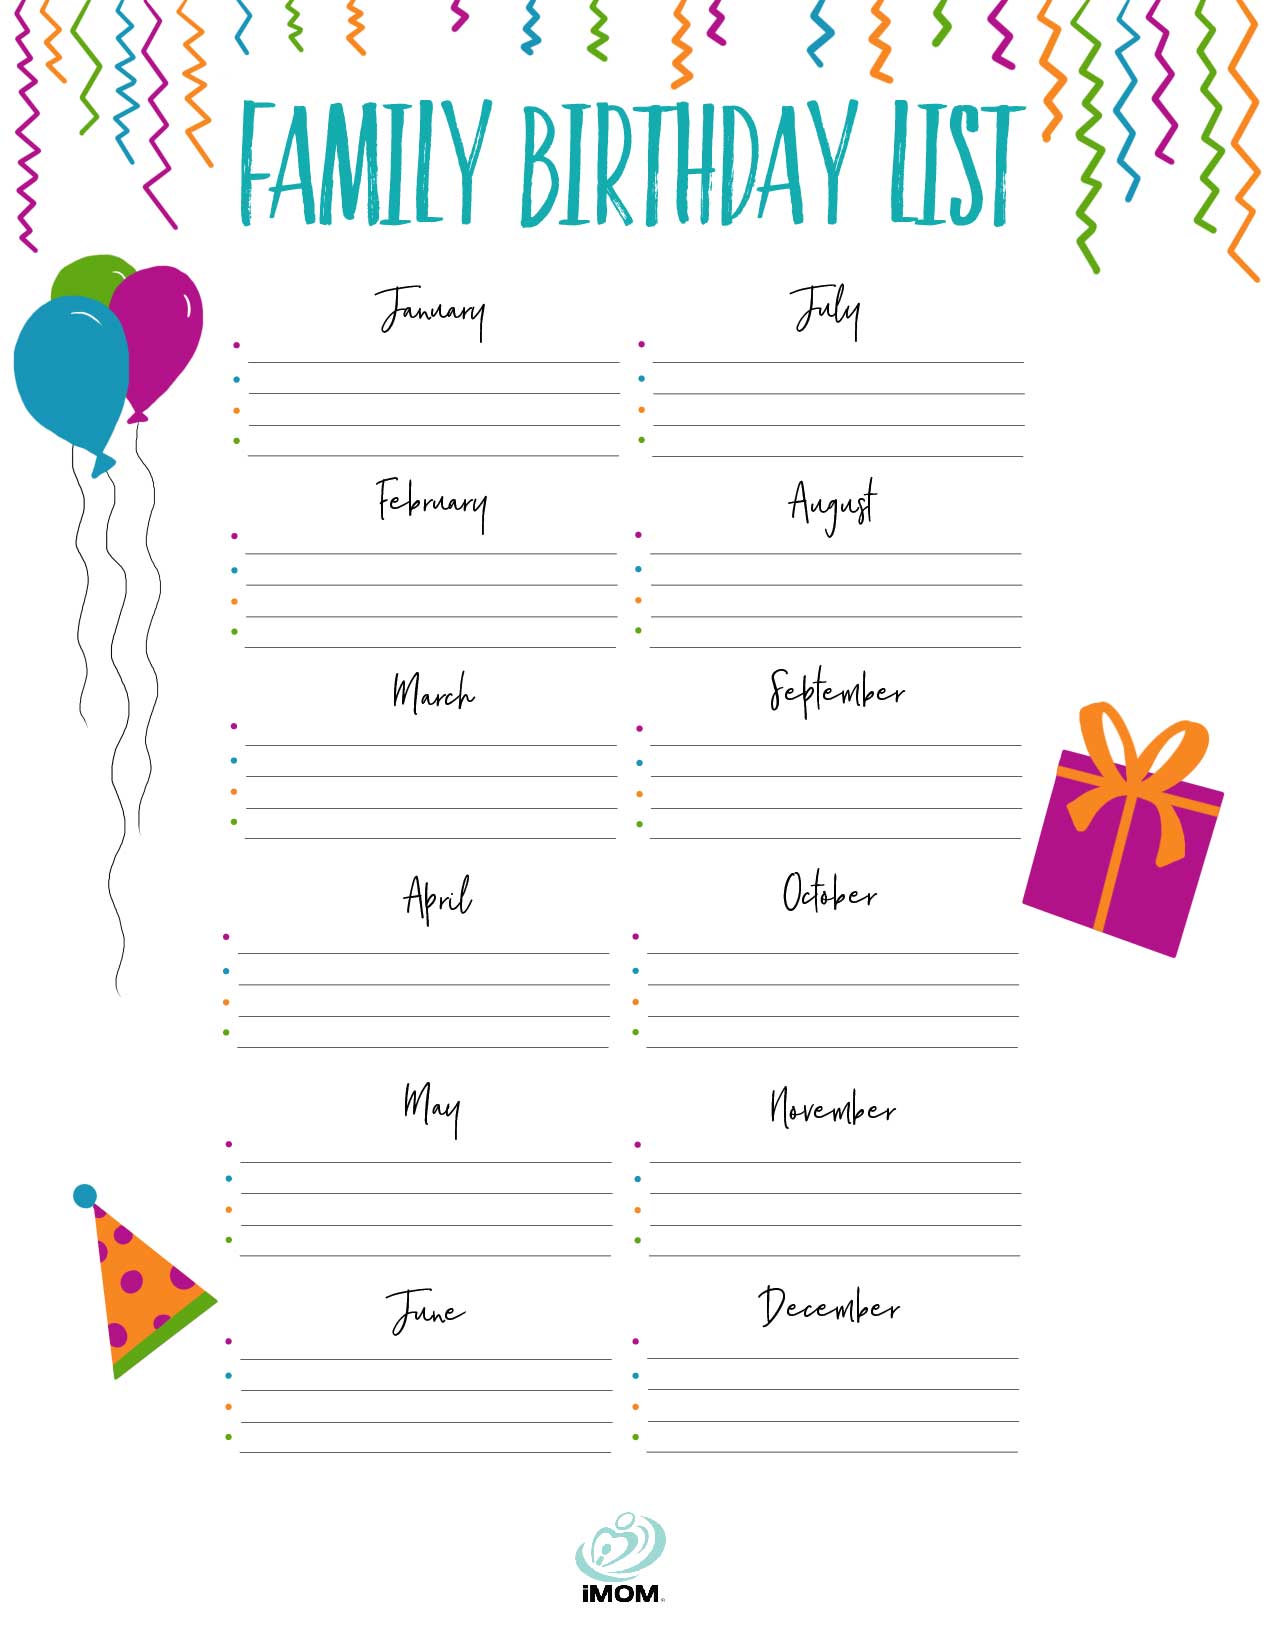 Free Printable Birthday List Template - FREE PRINTABLE TEMPLATES